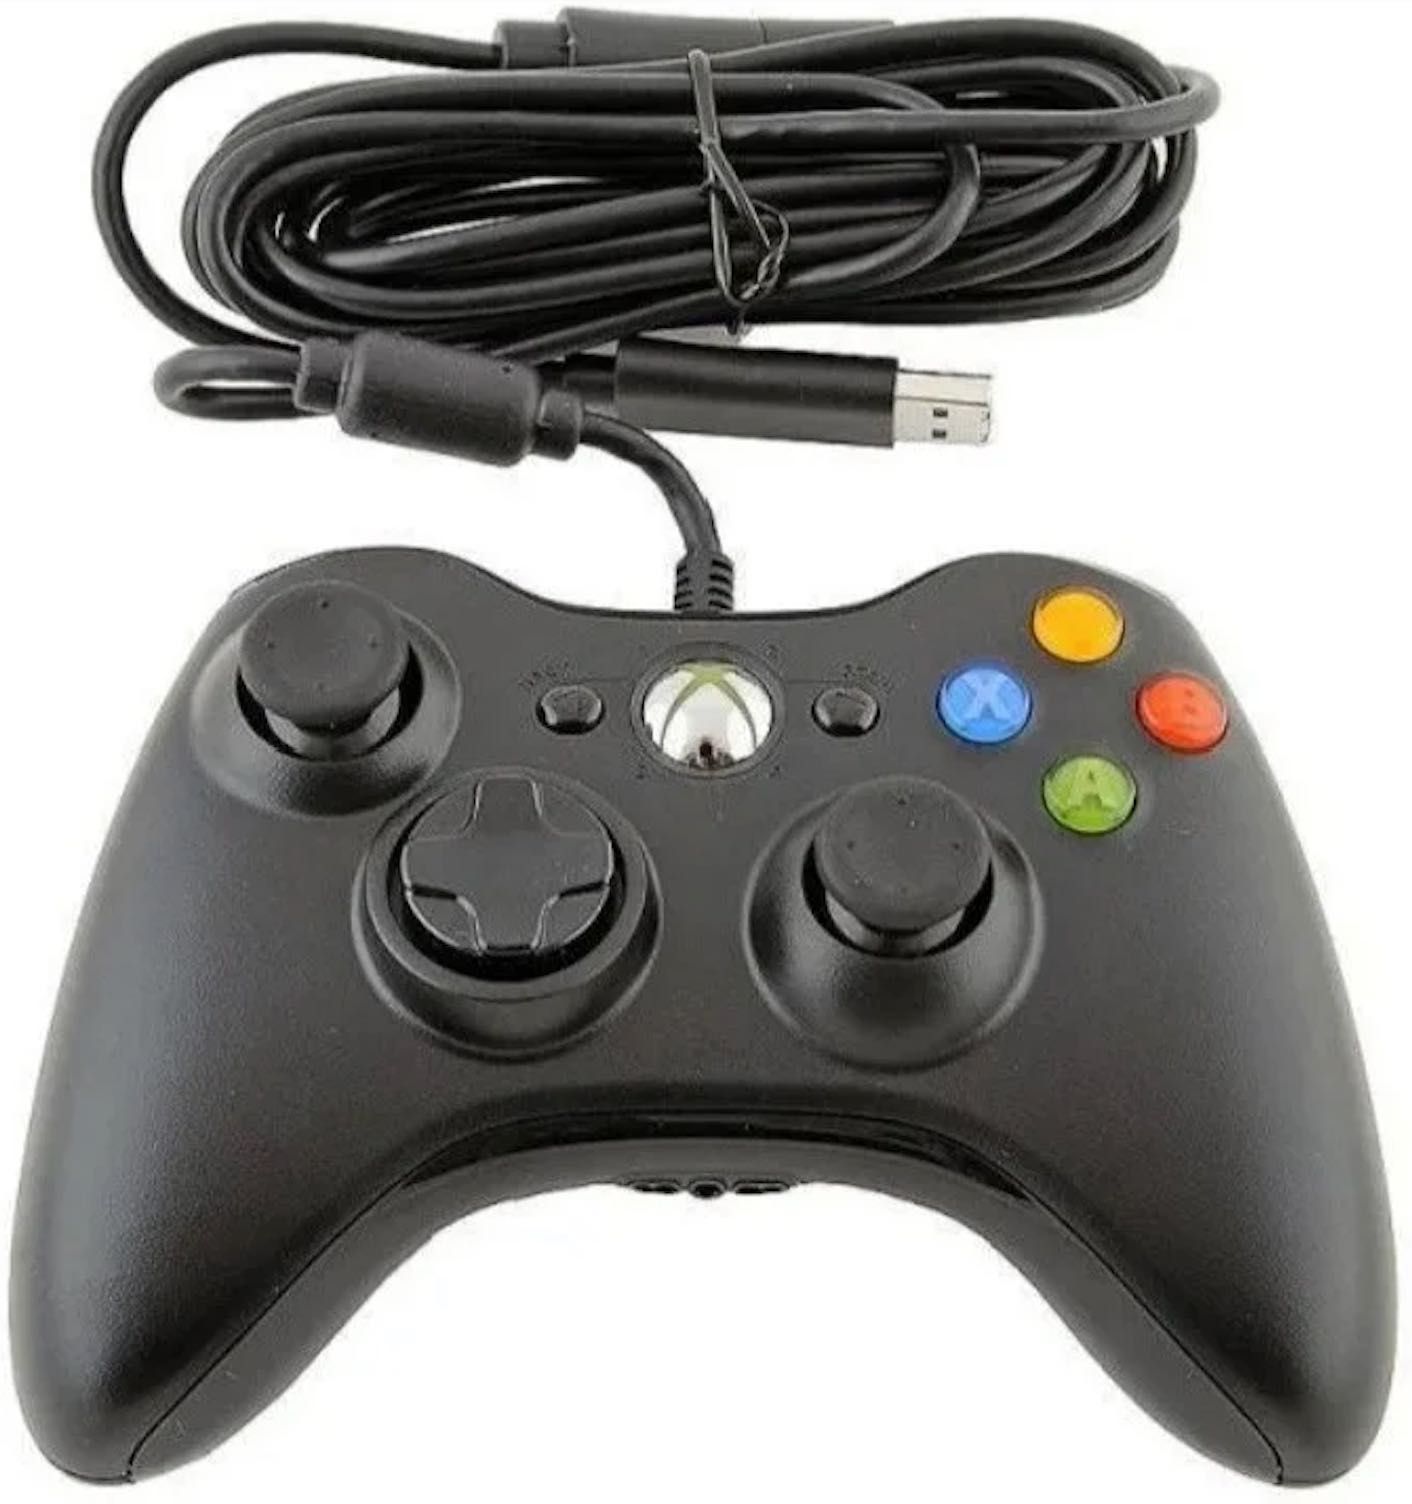 X360 геймпад. Геймпад Xbox 360 Controller. Геймпад Microsoft Xbox 360. Проводной геймпад от Xbox 360. Джойстик Microsoft (Xbox 360) USB.